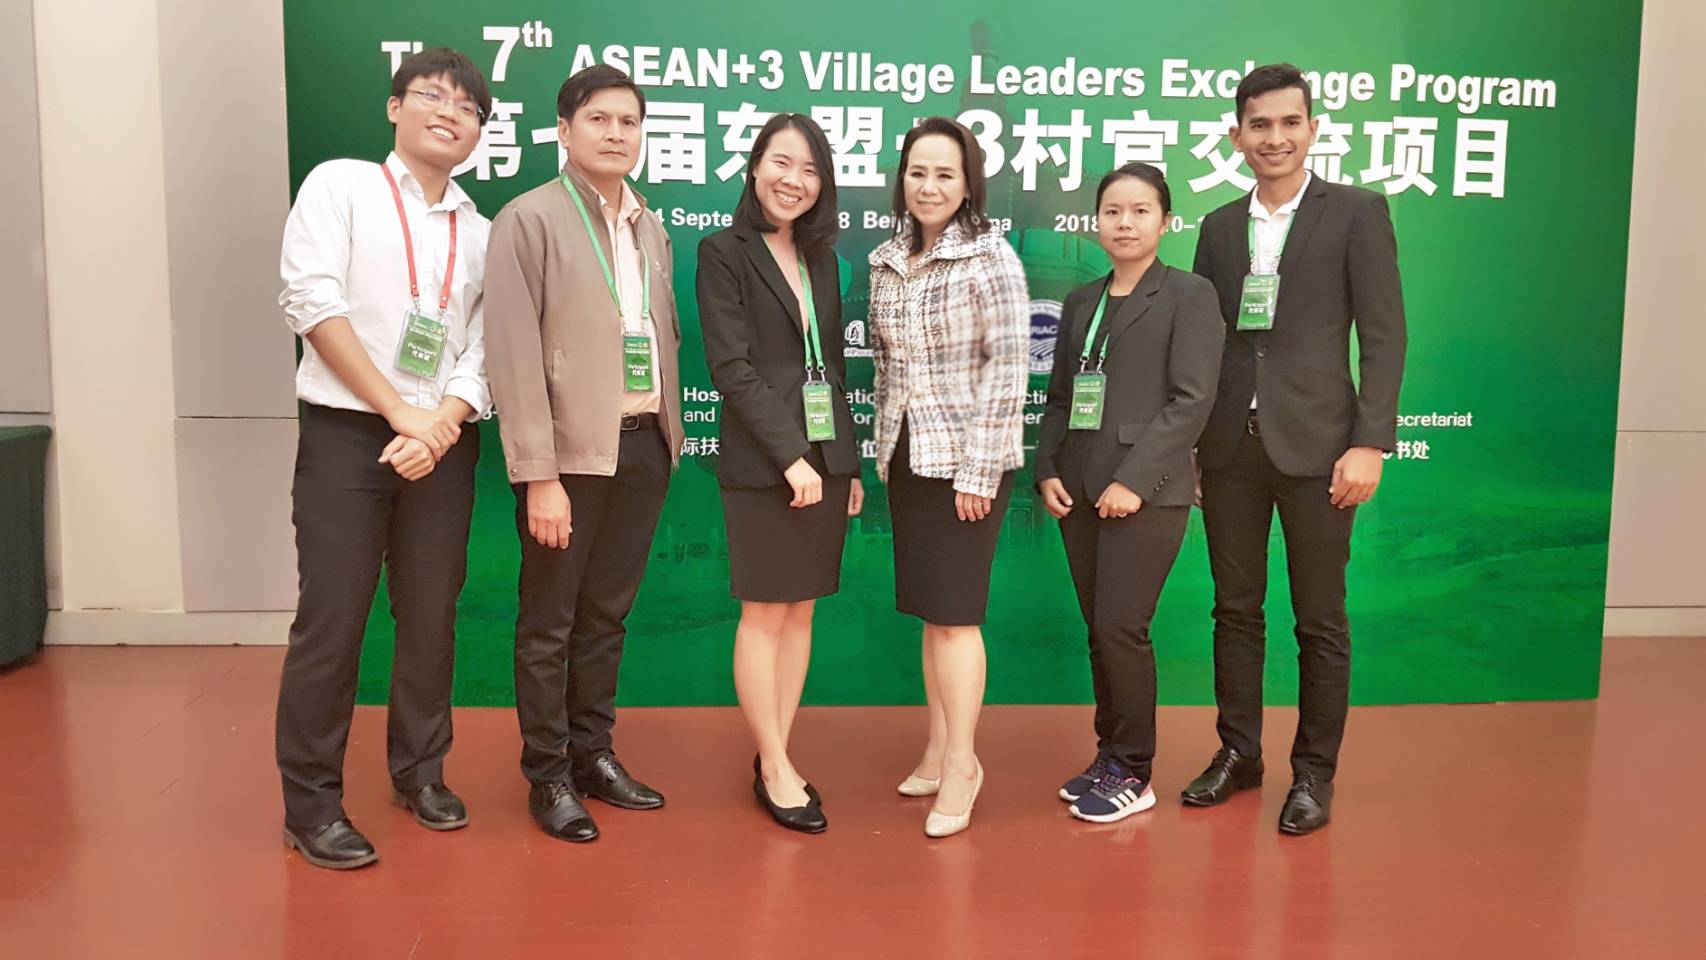 The 7<sup>th</sup> ASEAN+3 Village Leaders Exchange Program between 10-14 September 2018 in Beijing, People’s Republic of China. 